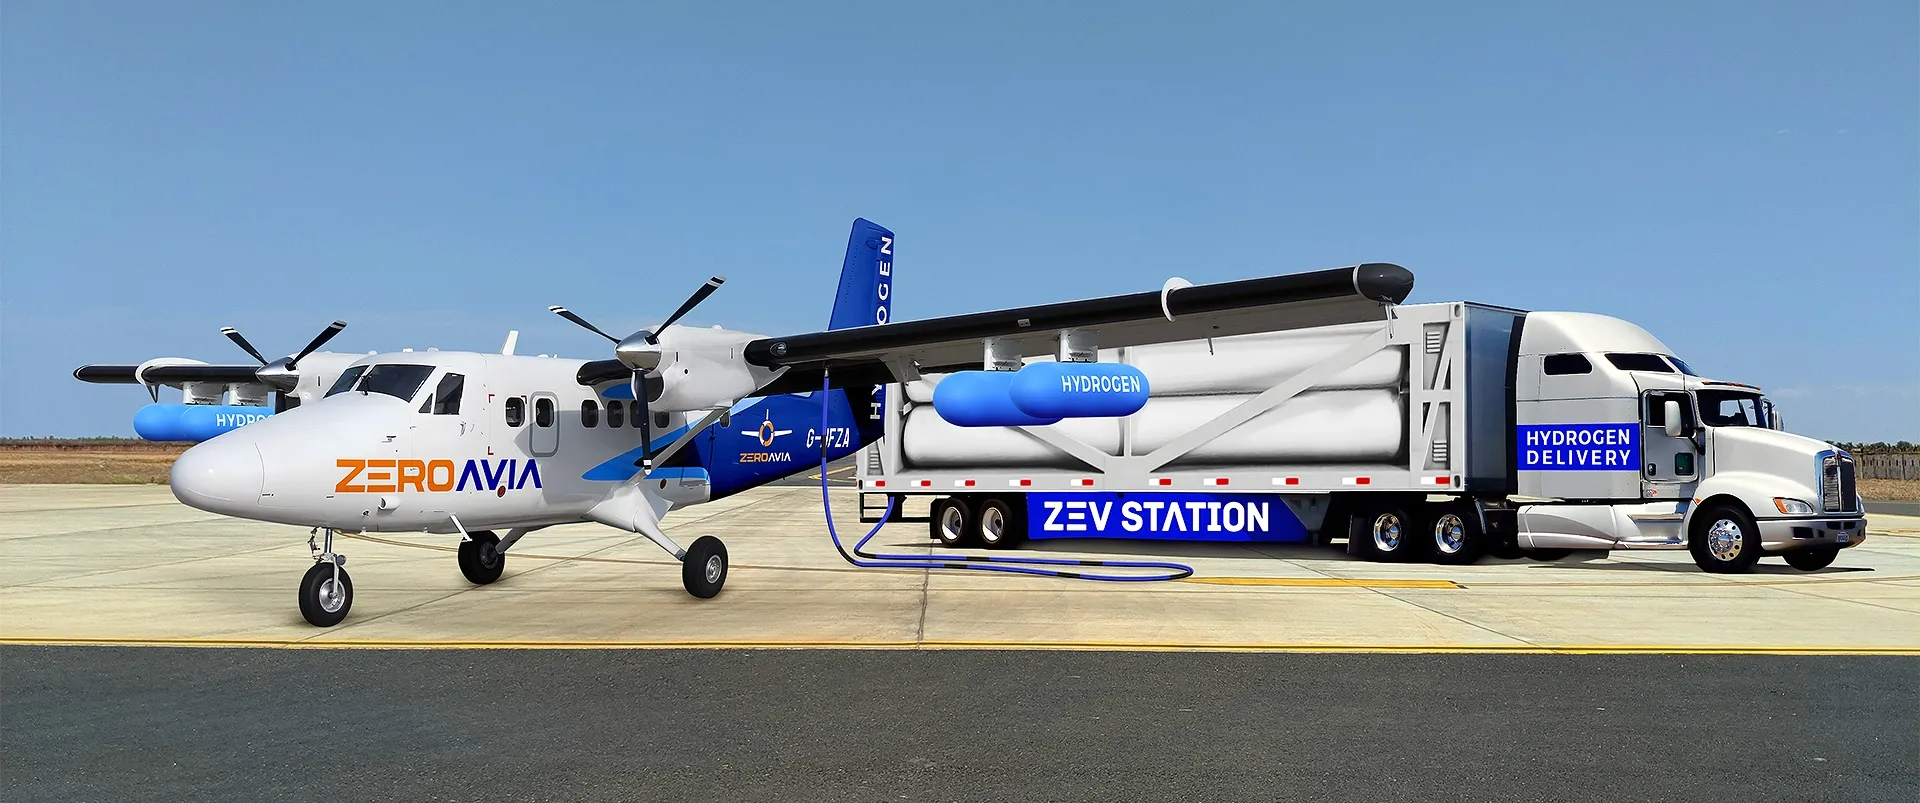 zeroavia hydrogen refueling station zev stations